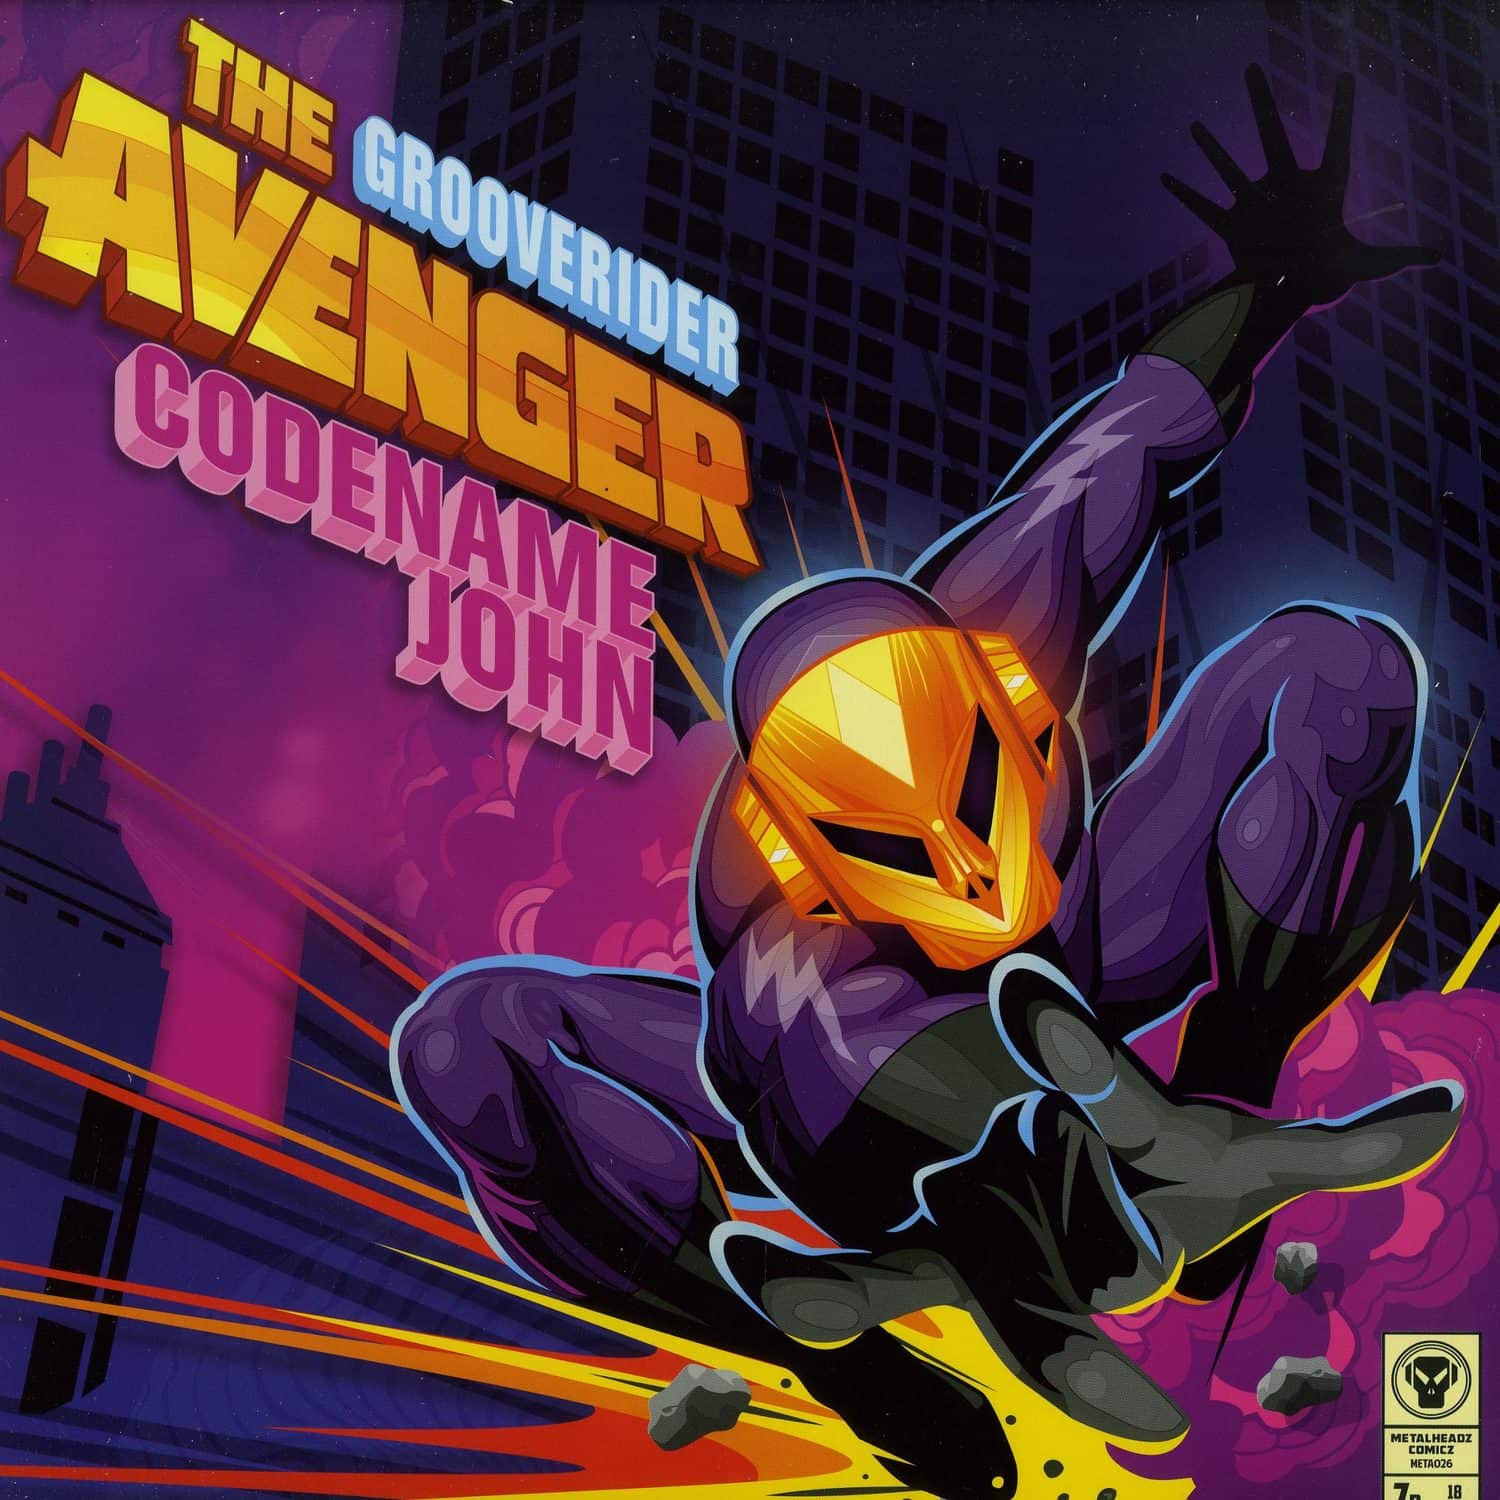 Grooverider Presents Codename John - THE AVENGER, JOHN & TONY, SAVIOUR SELECTOR